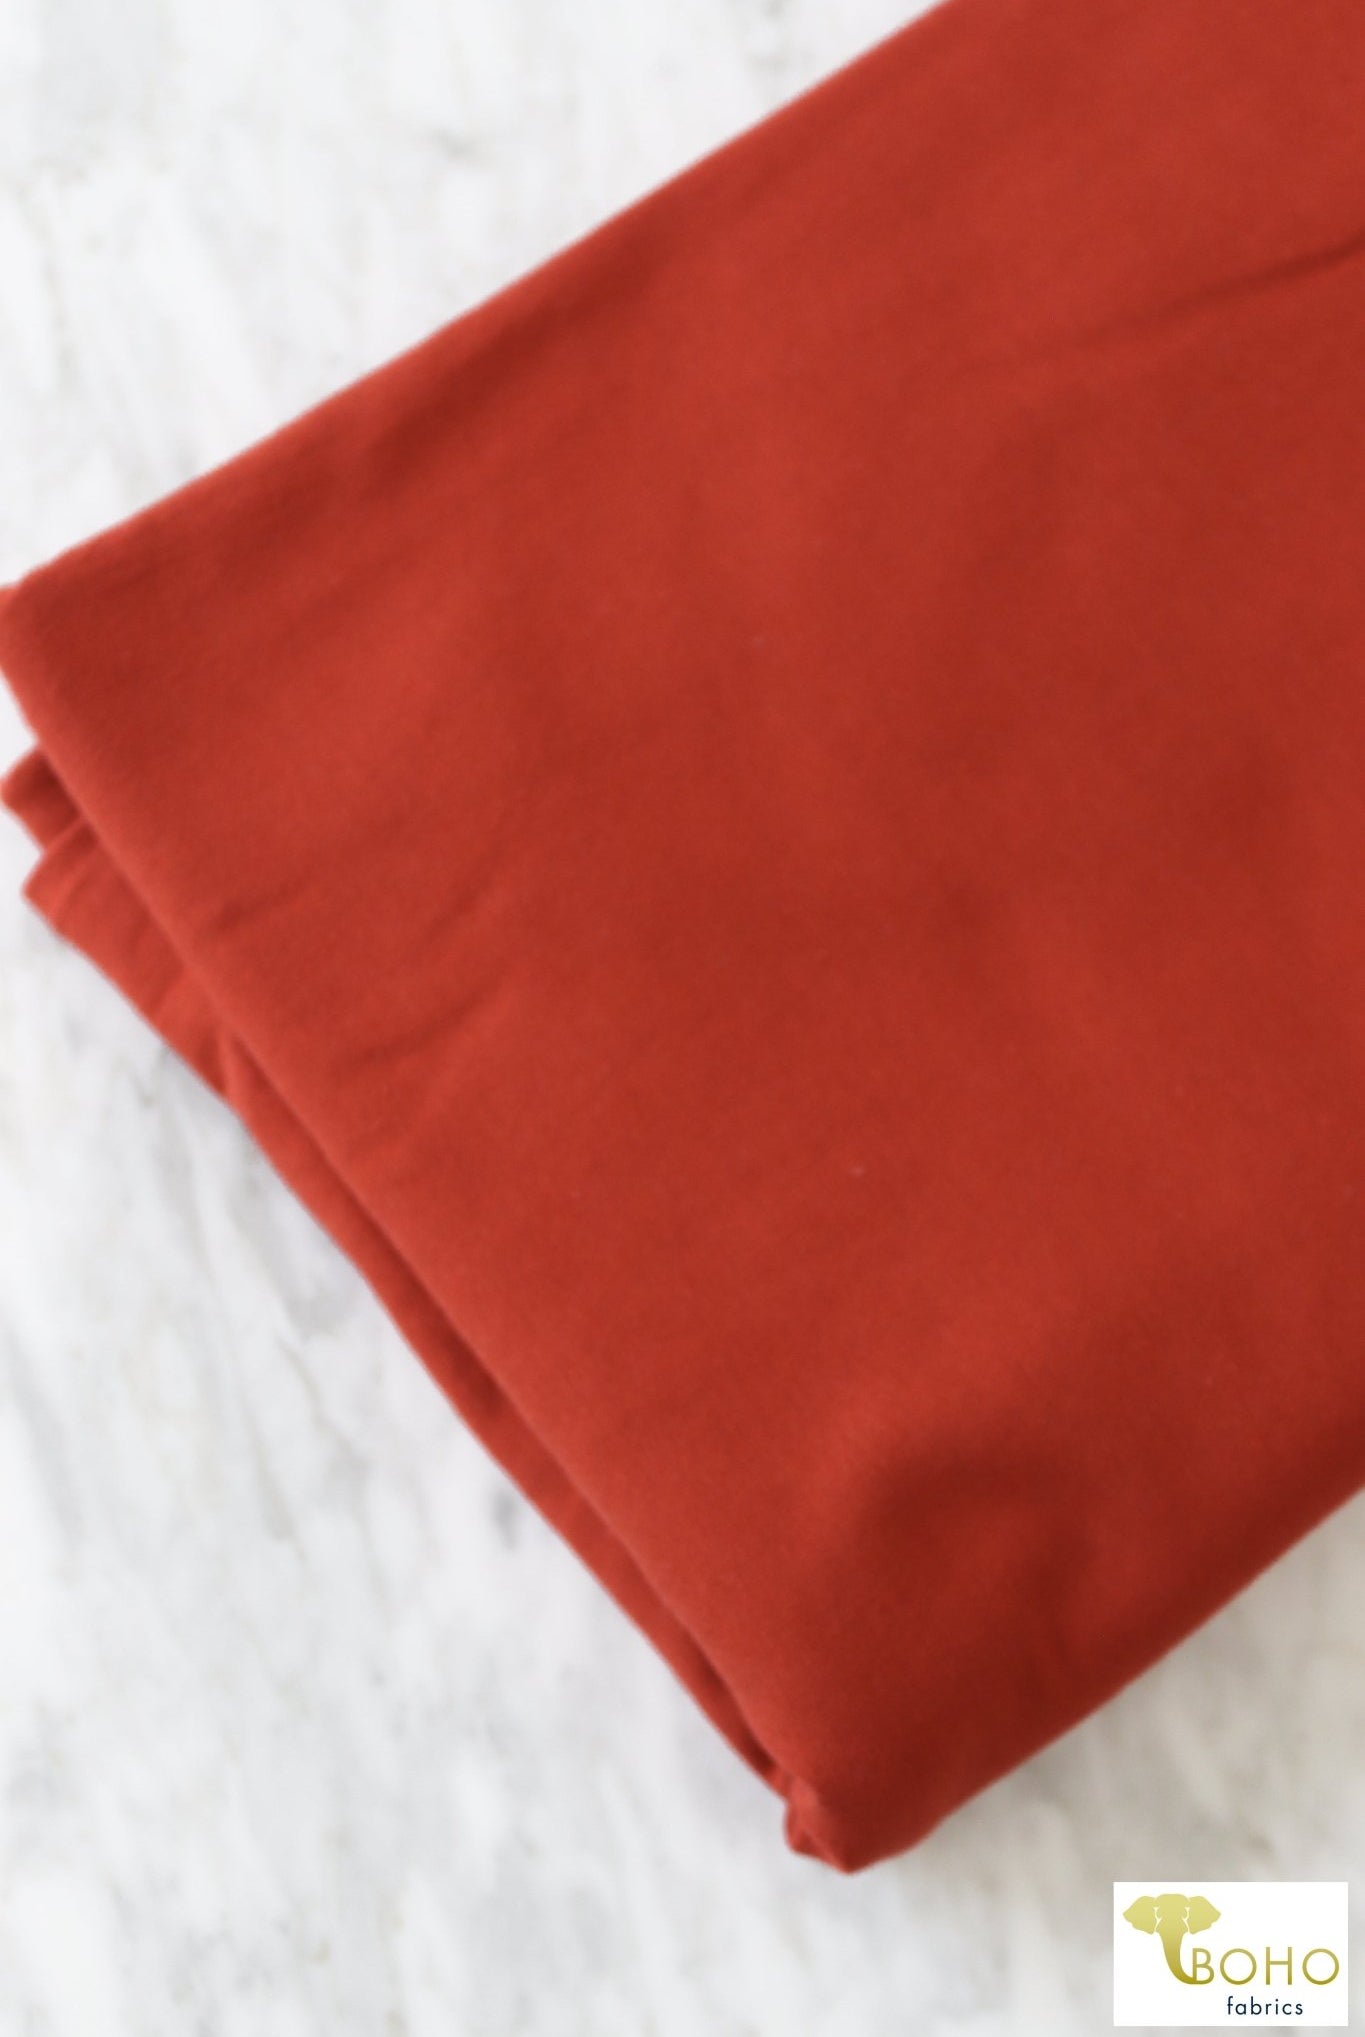 Rust Red, Cotton Spandex Knit. CLS-107, 9 oz. - Boho Fabrics